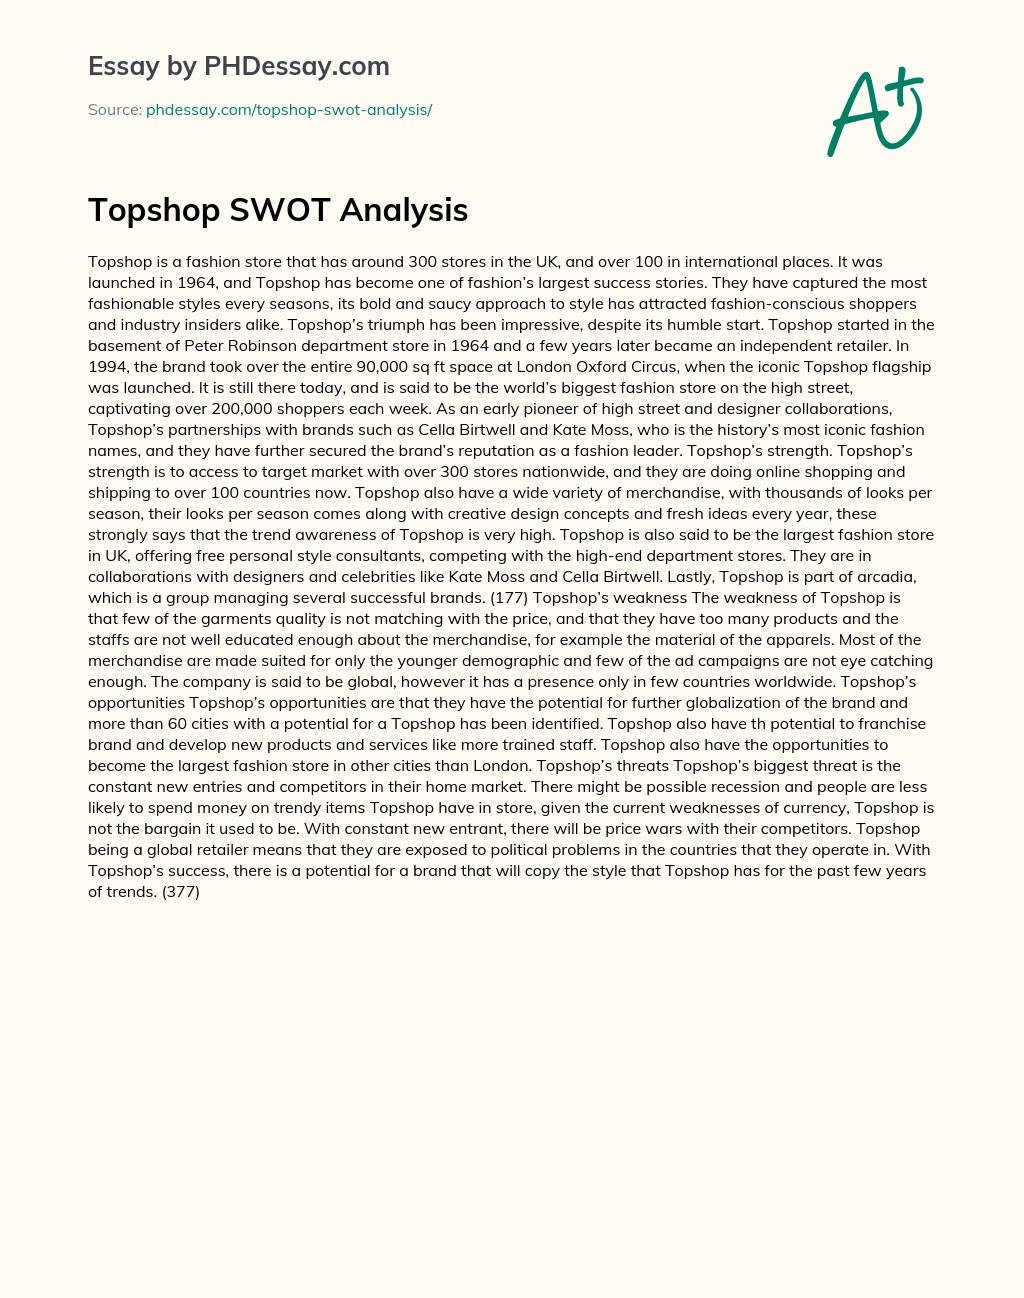 Topshop SWOT Analysis essay